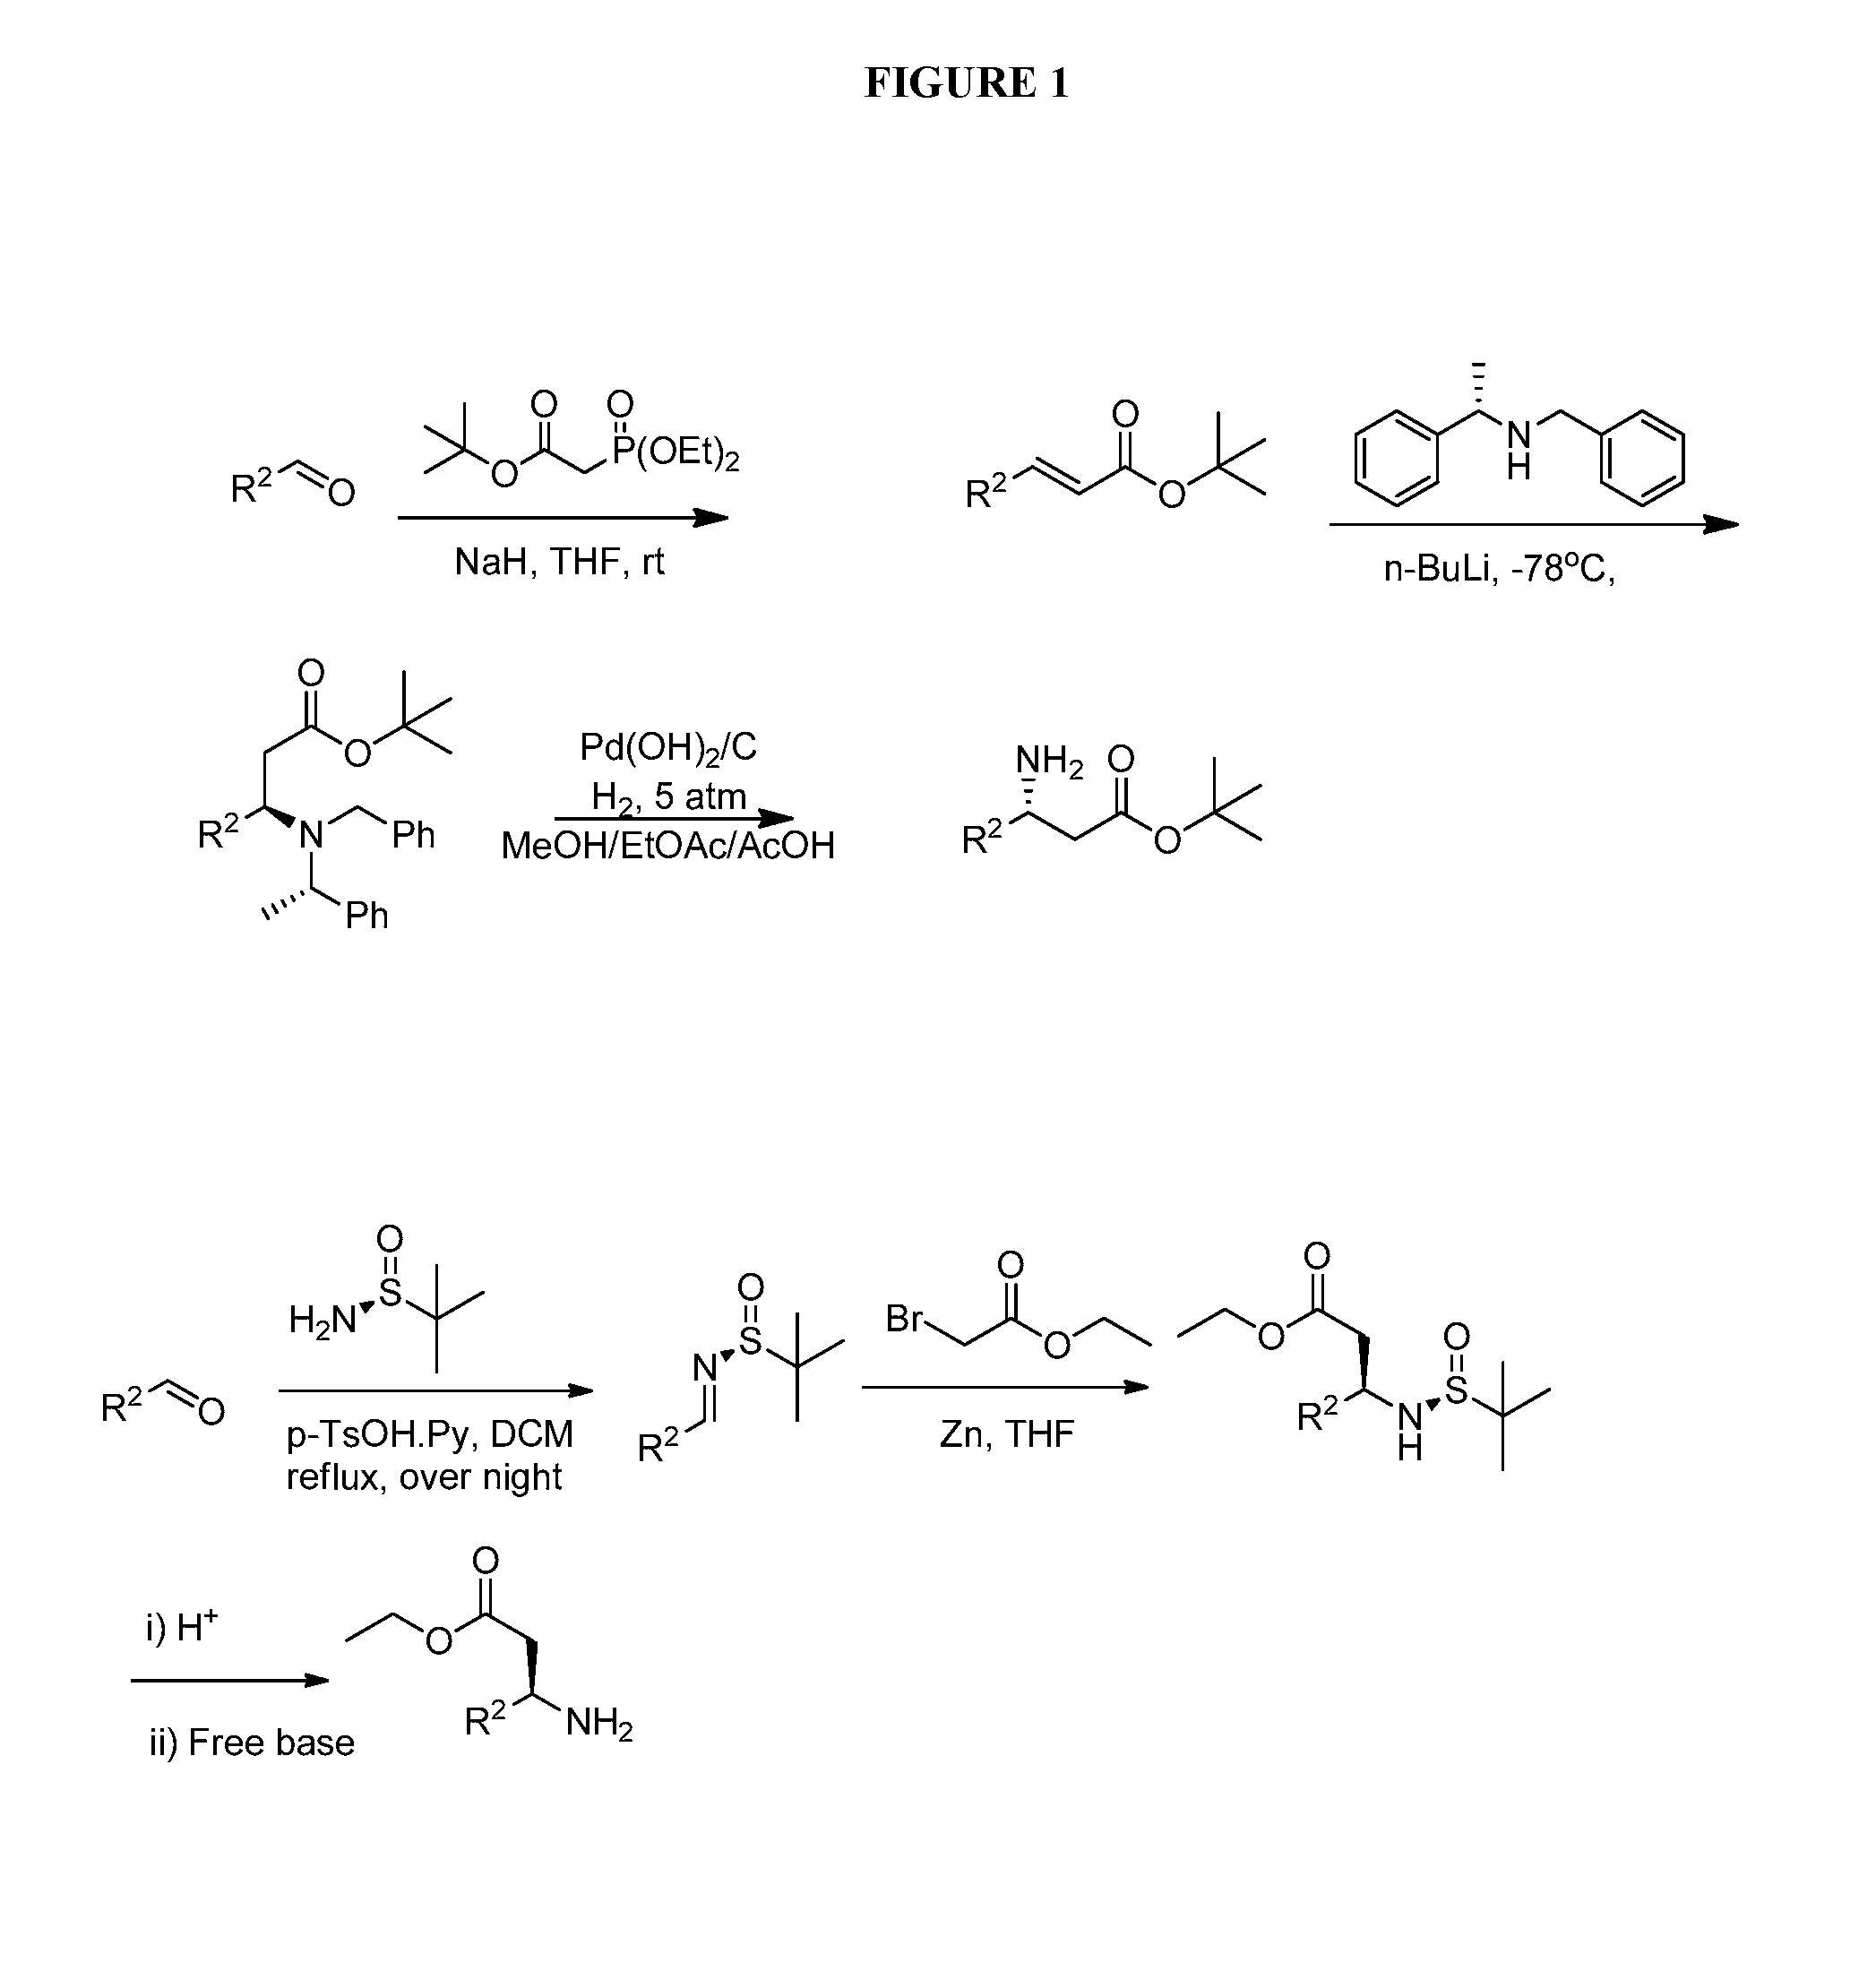 Bicyclic-pyrimidinedione compounds